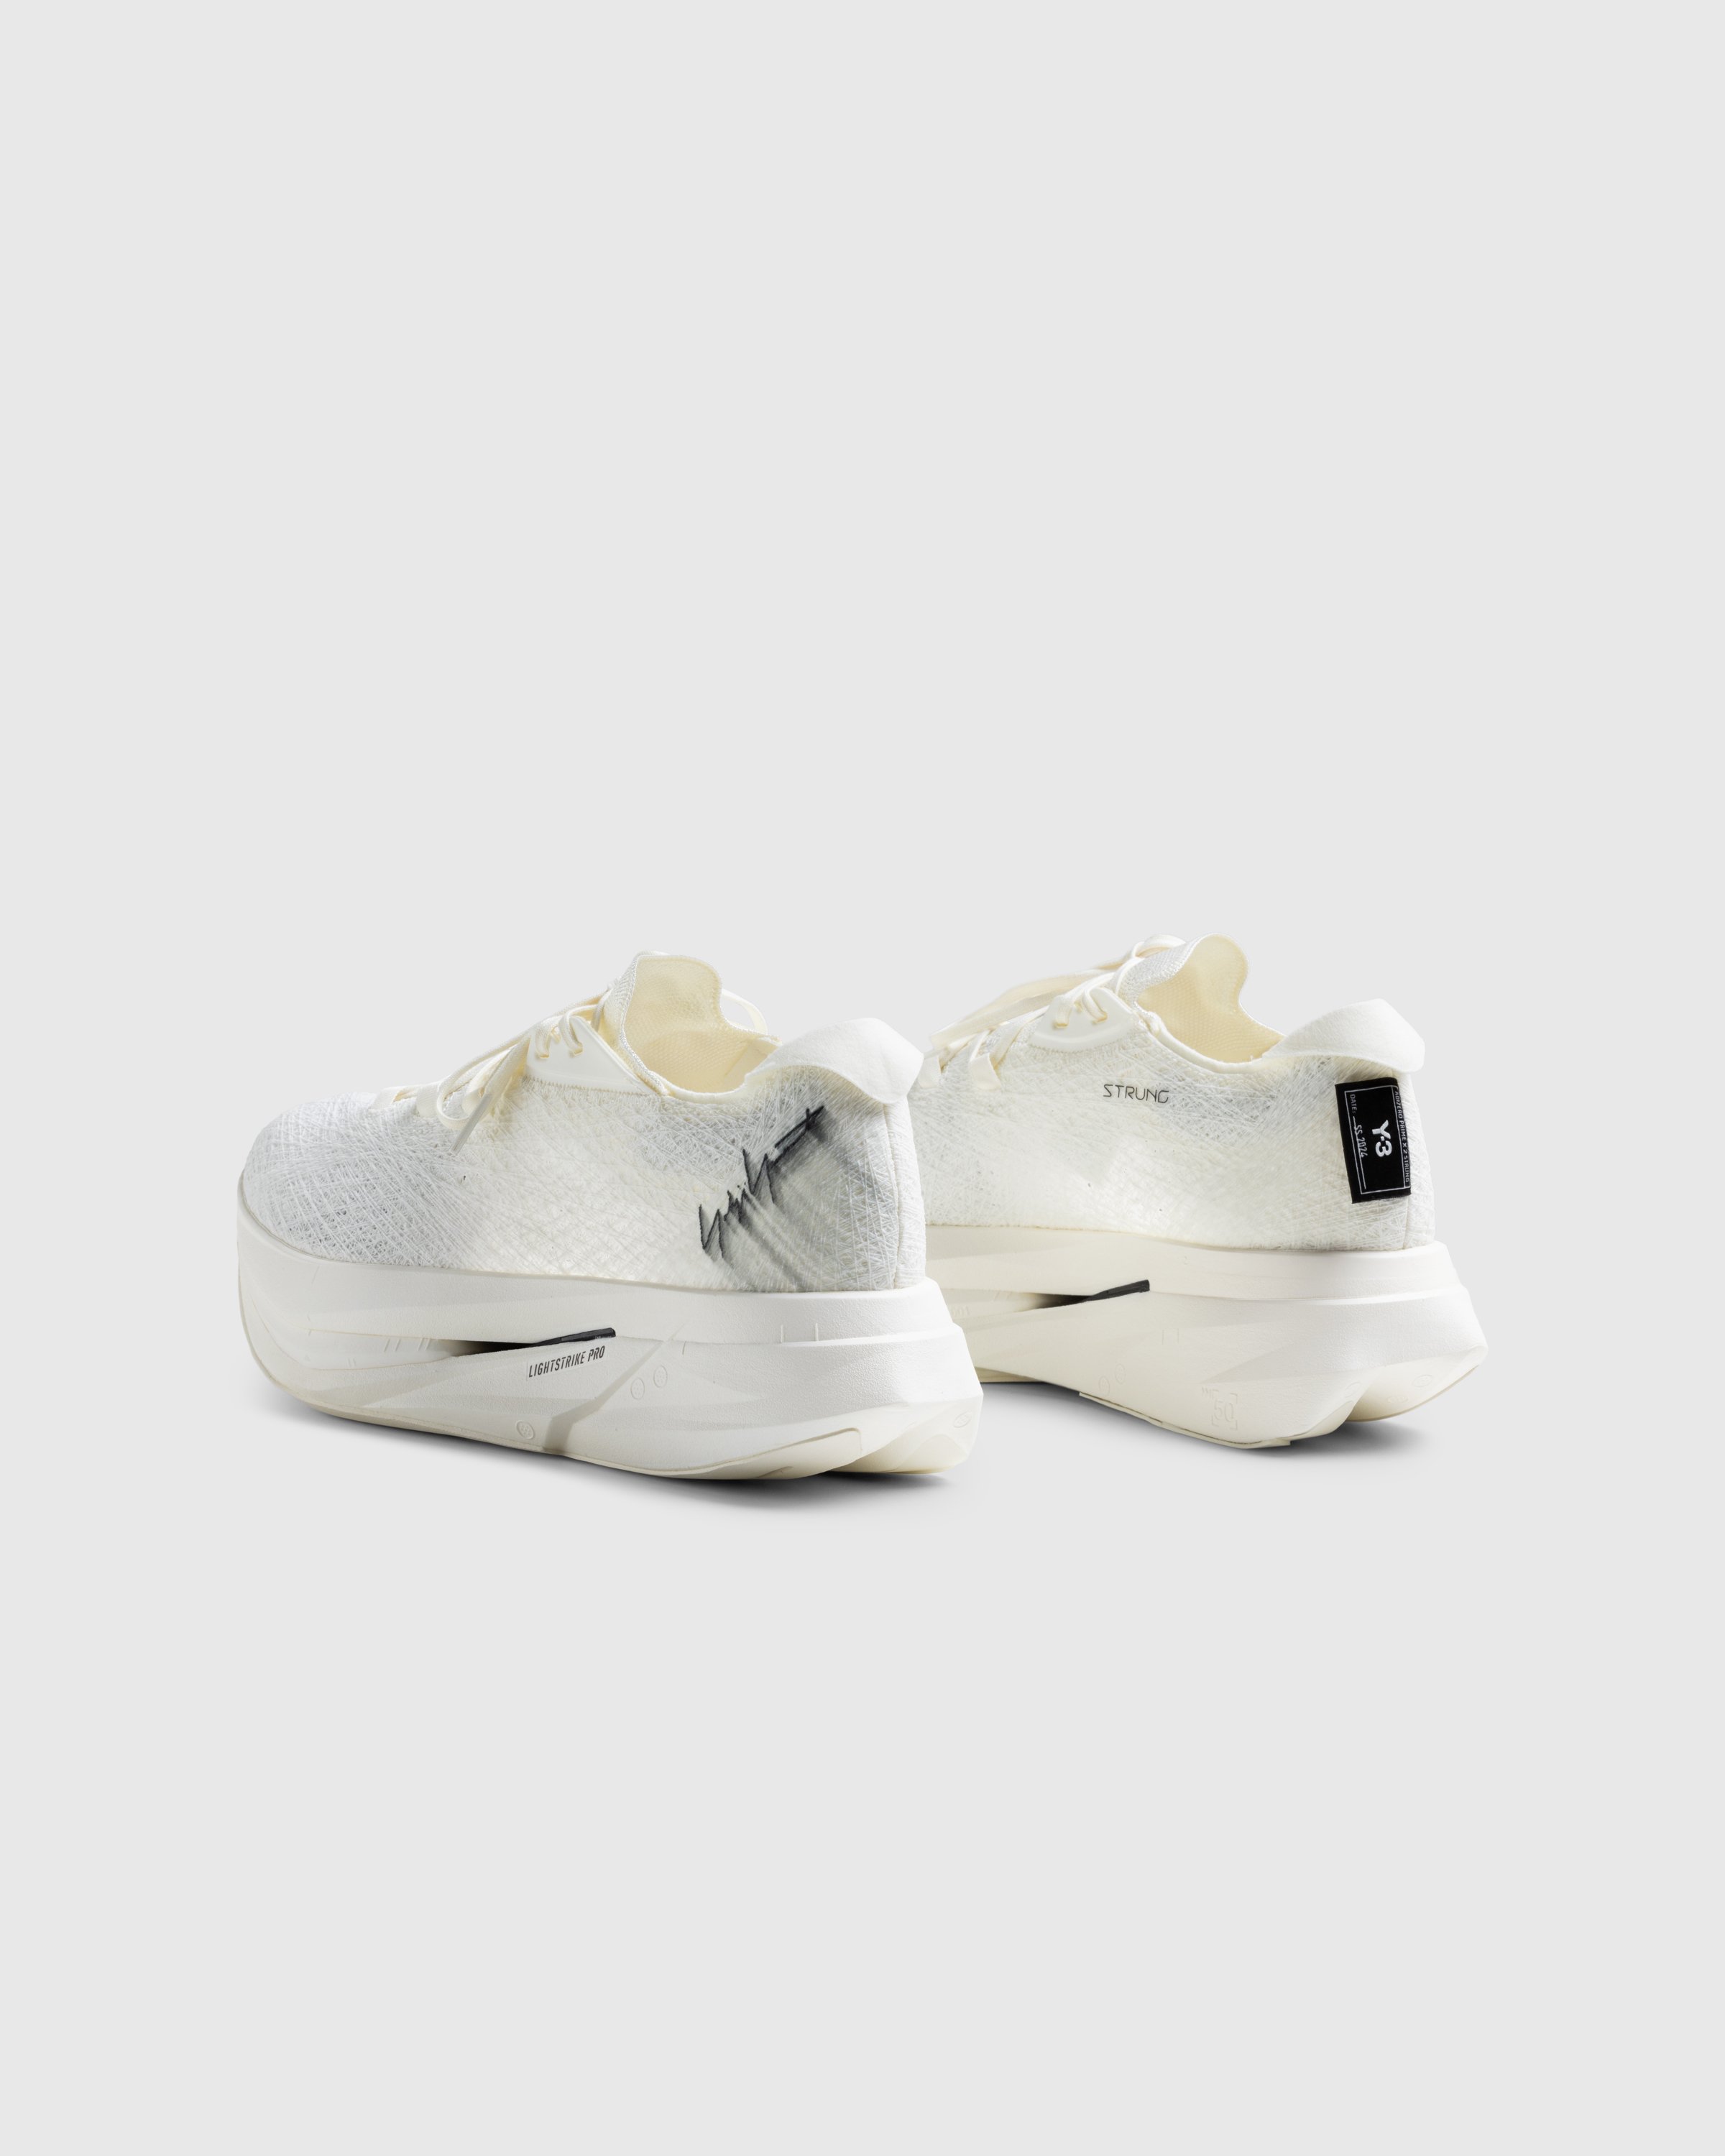 Y-3 - Prime X 2 Strun Owhite/Cblack/O - Footwear - White - Image 4